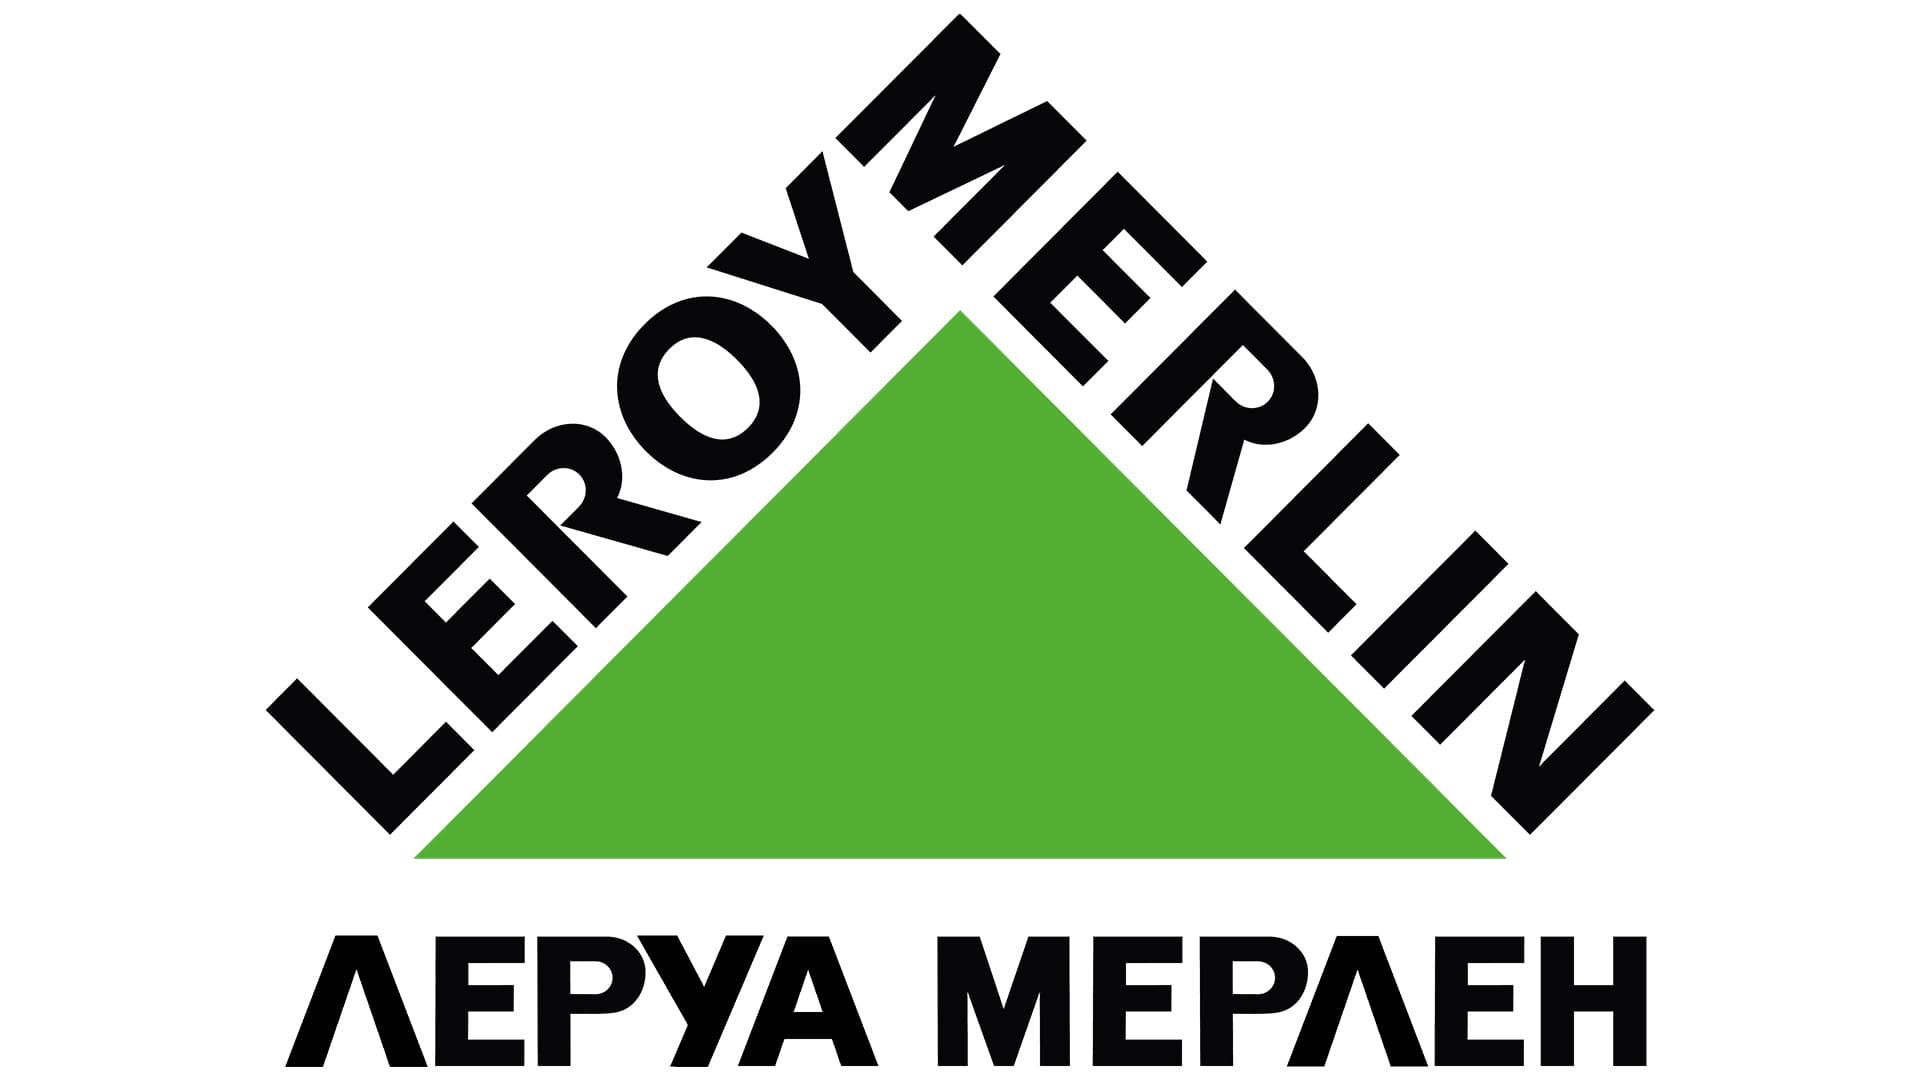 Leroy Merlin Symbole